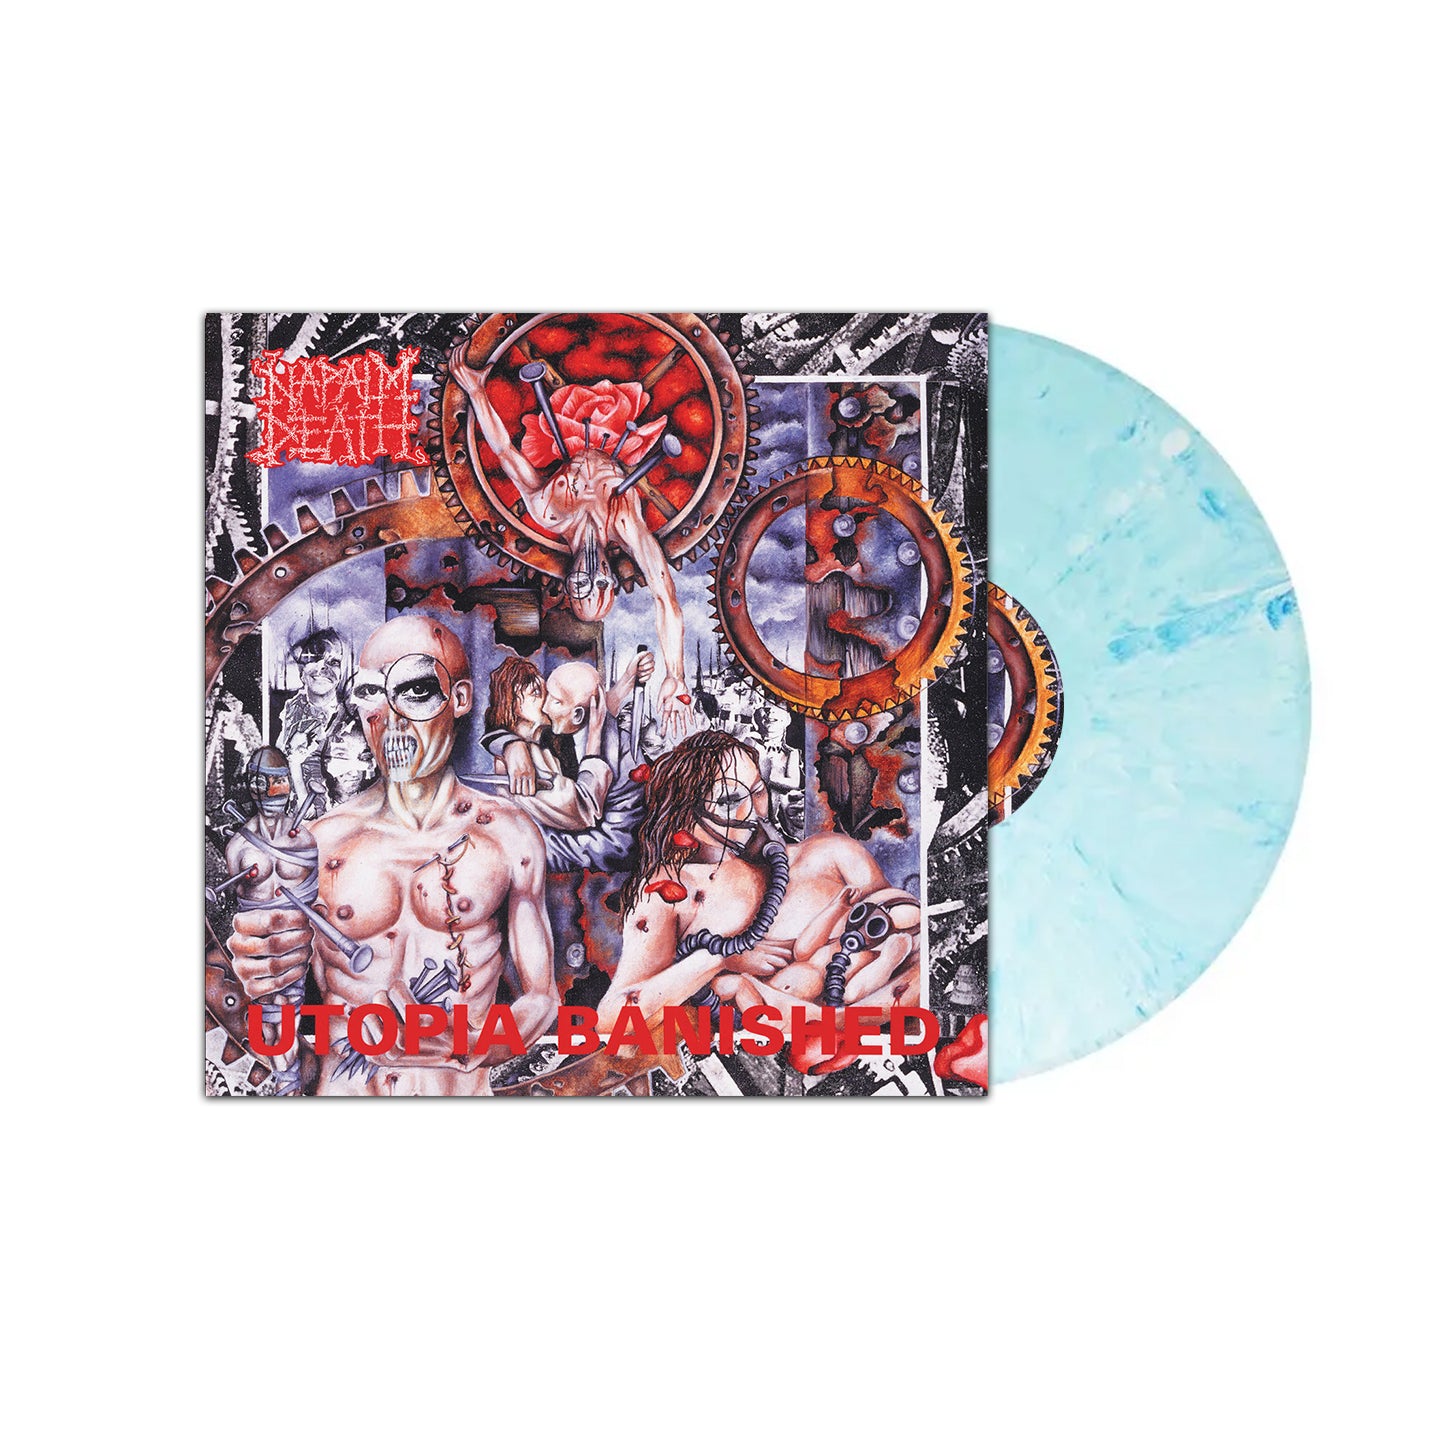 Napalm Death "Utopia Banished" White / Blue Marble Vinyl